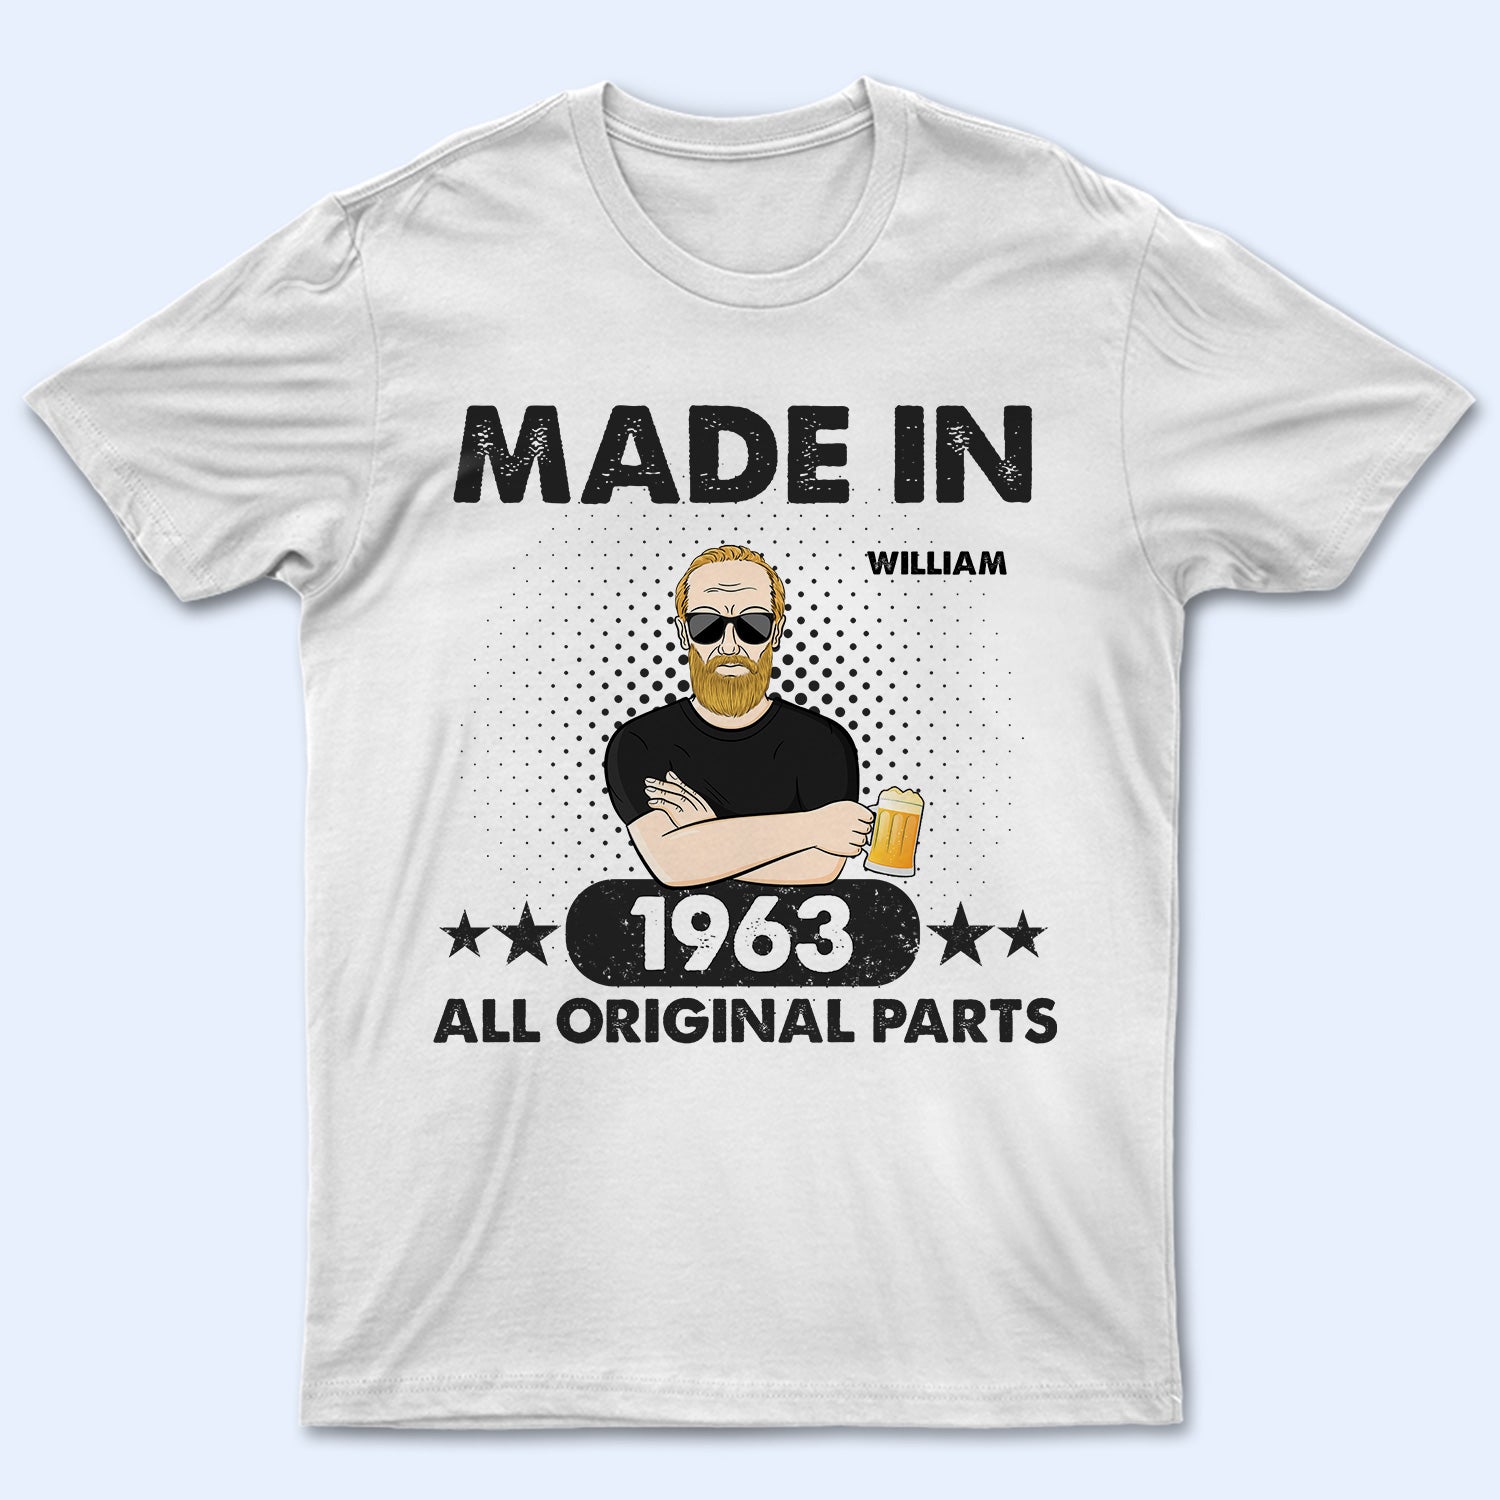 All Original Parts - Family Birthday Gift For Dad, Mom, Grandpa & Grandma - Personalized Custom T Shirt